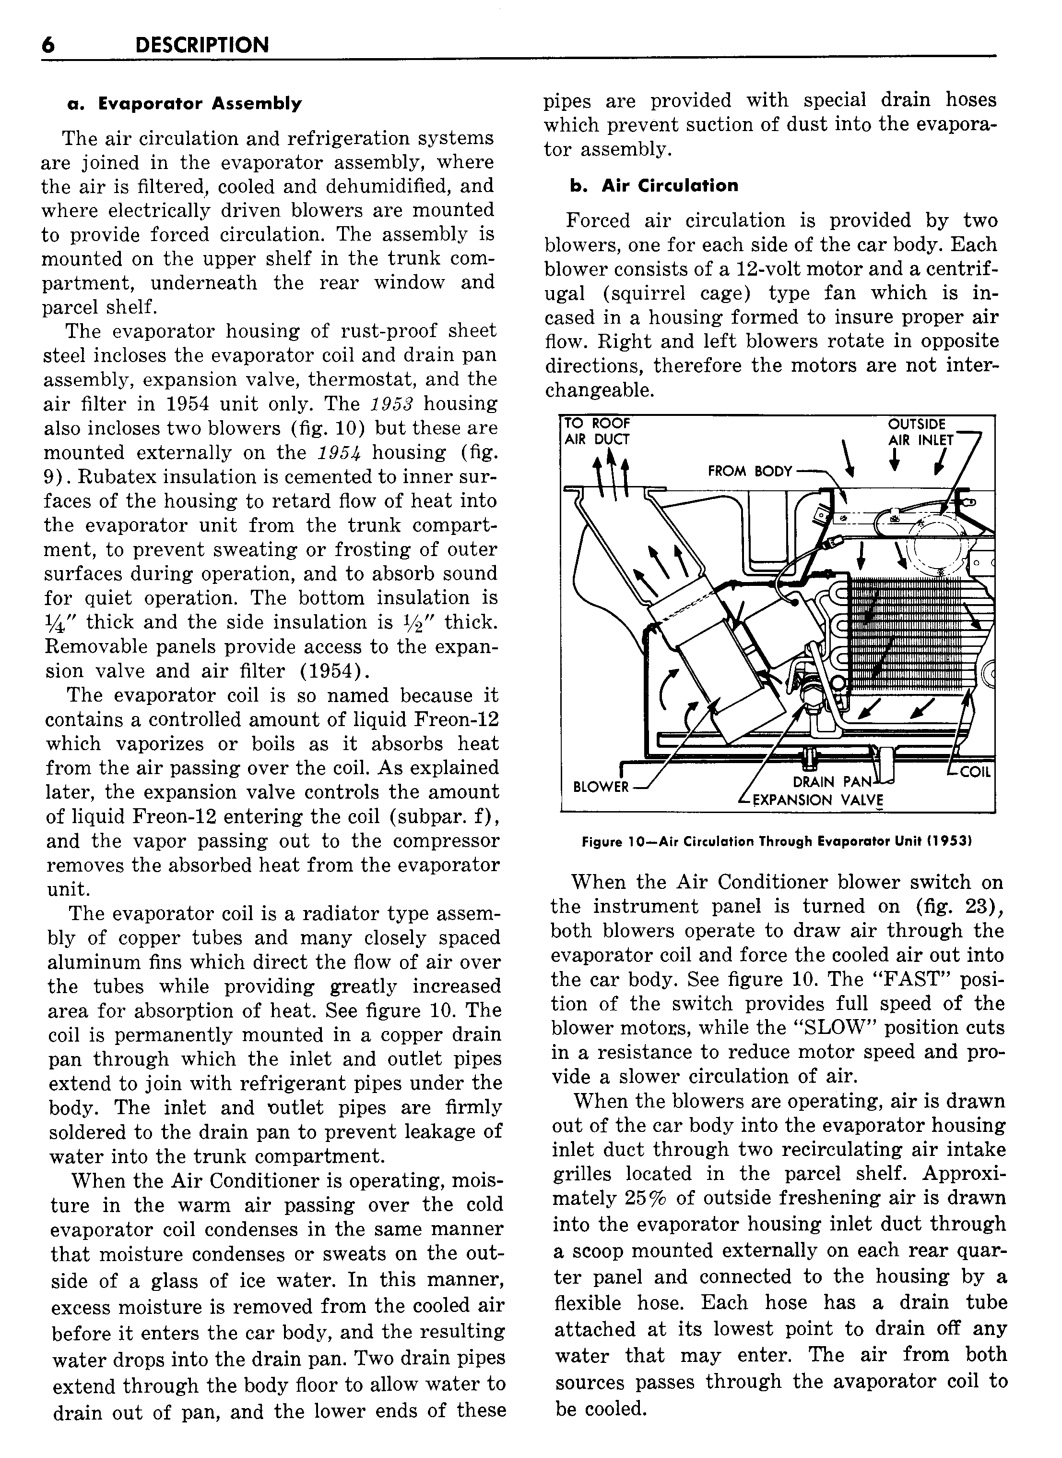 n_16 1954 Buick Shop Manual - Air Conditioner-008-008.jpg